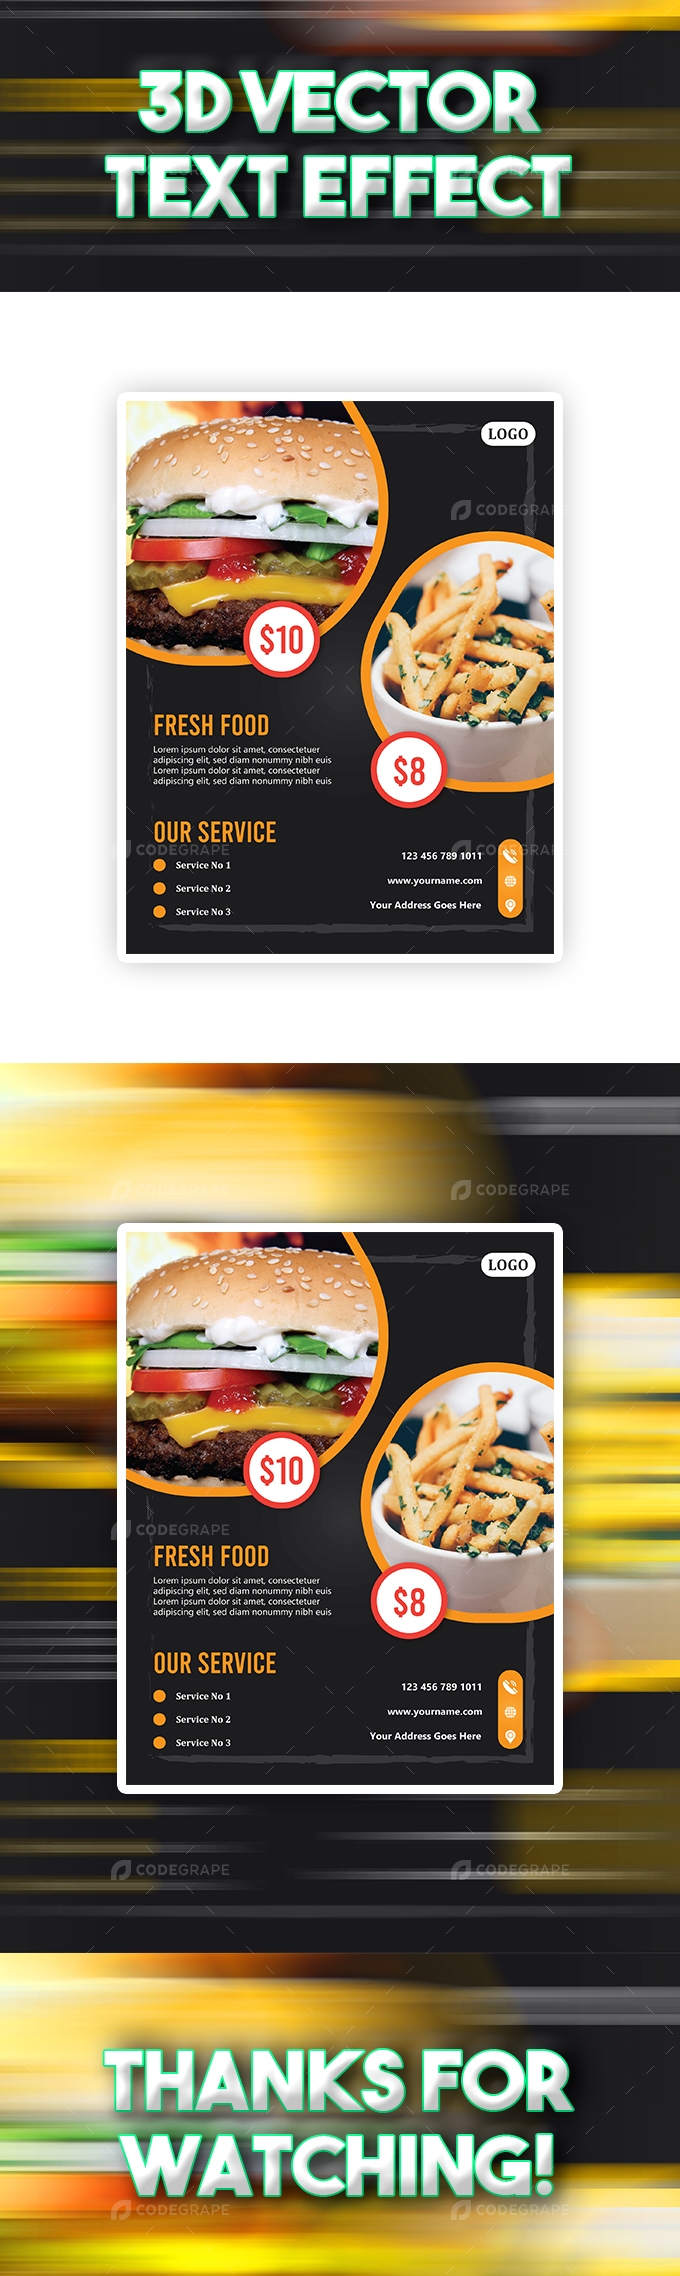 Restaurant's Fast Food Flyer